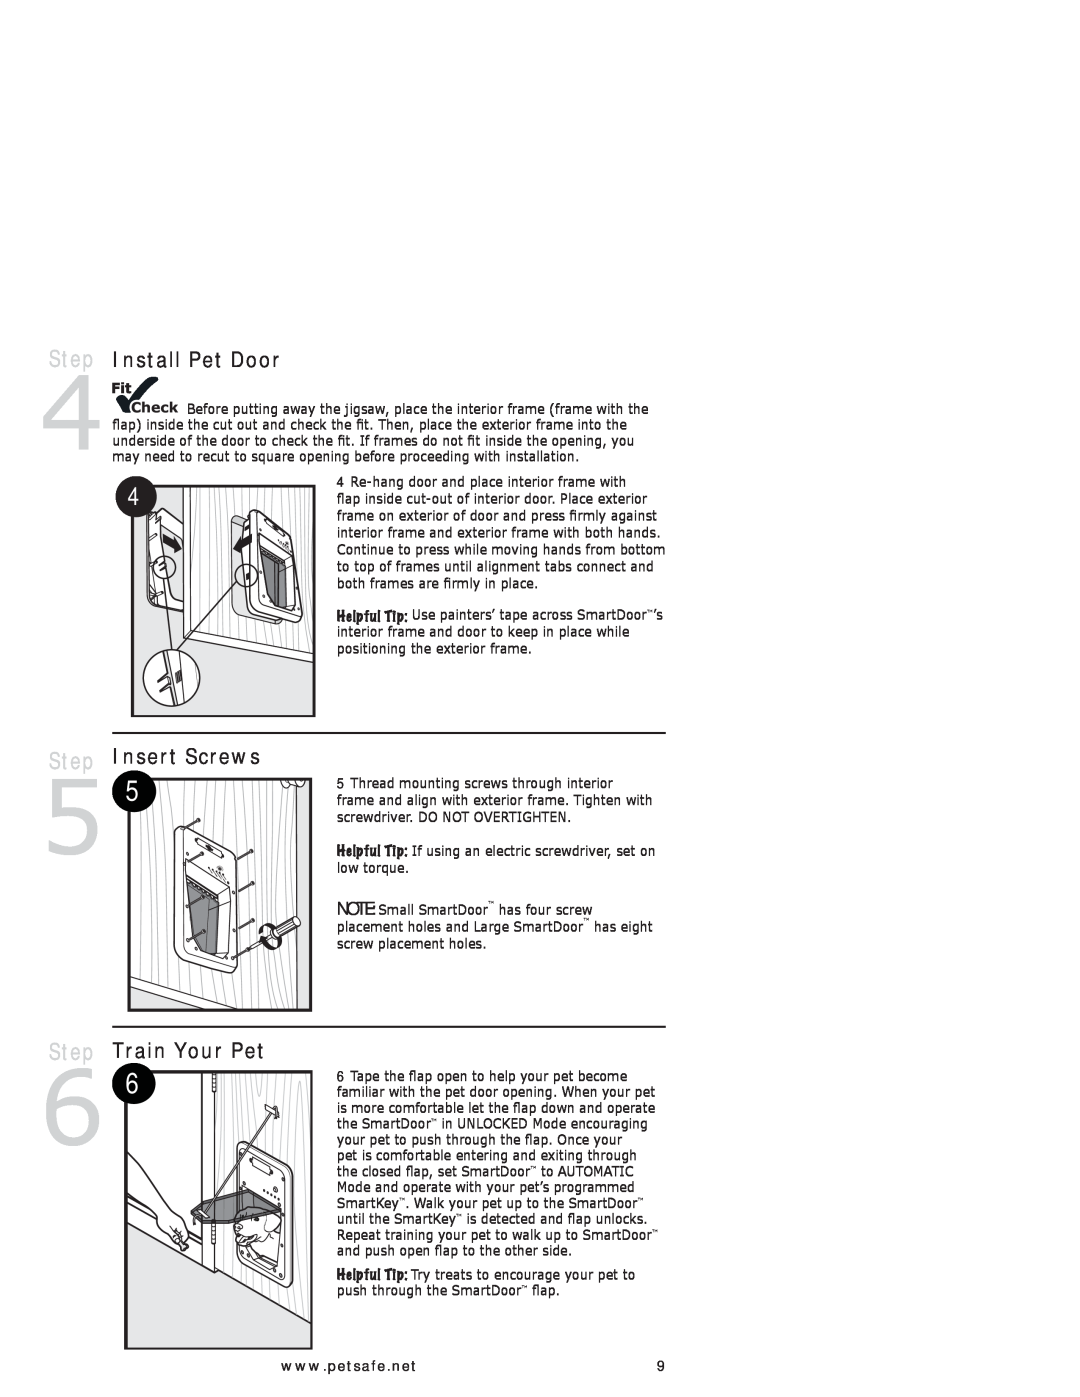 Petsafe PPA11-10709, PPA11-10711 manual Install Pet Door, Step Insert Screws, Step Train Your Pet 